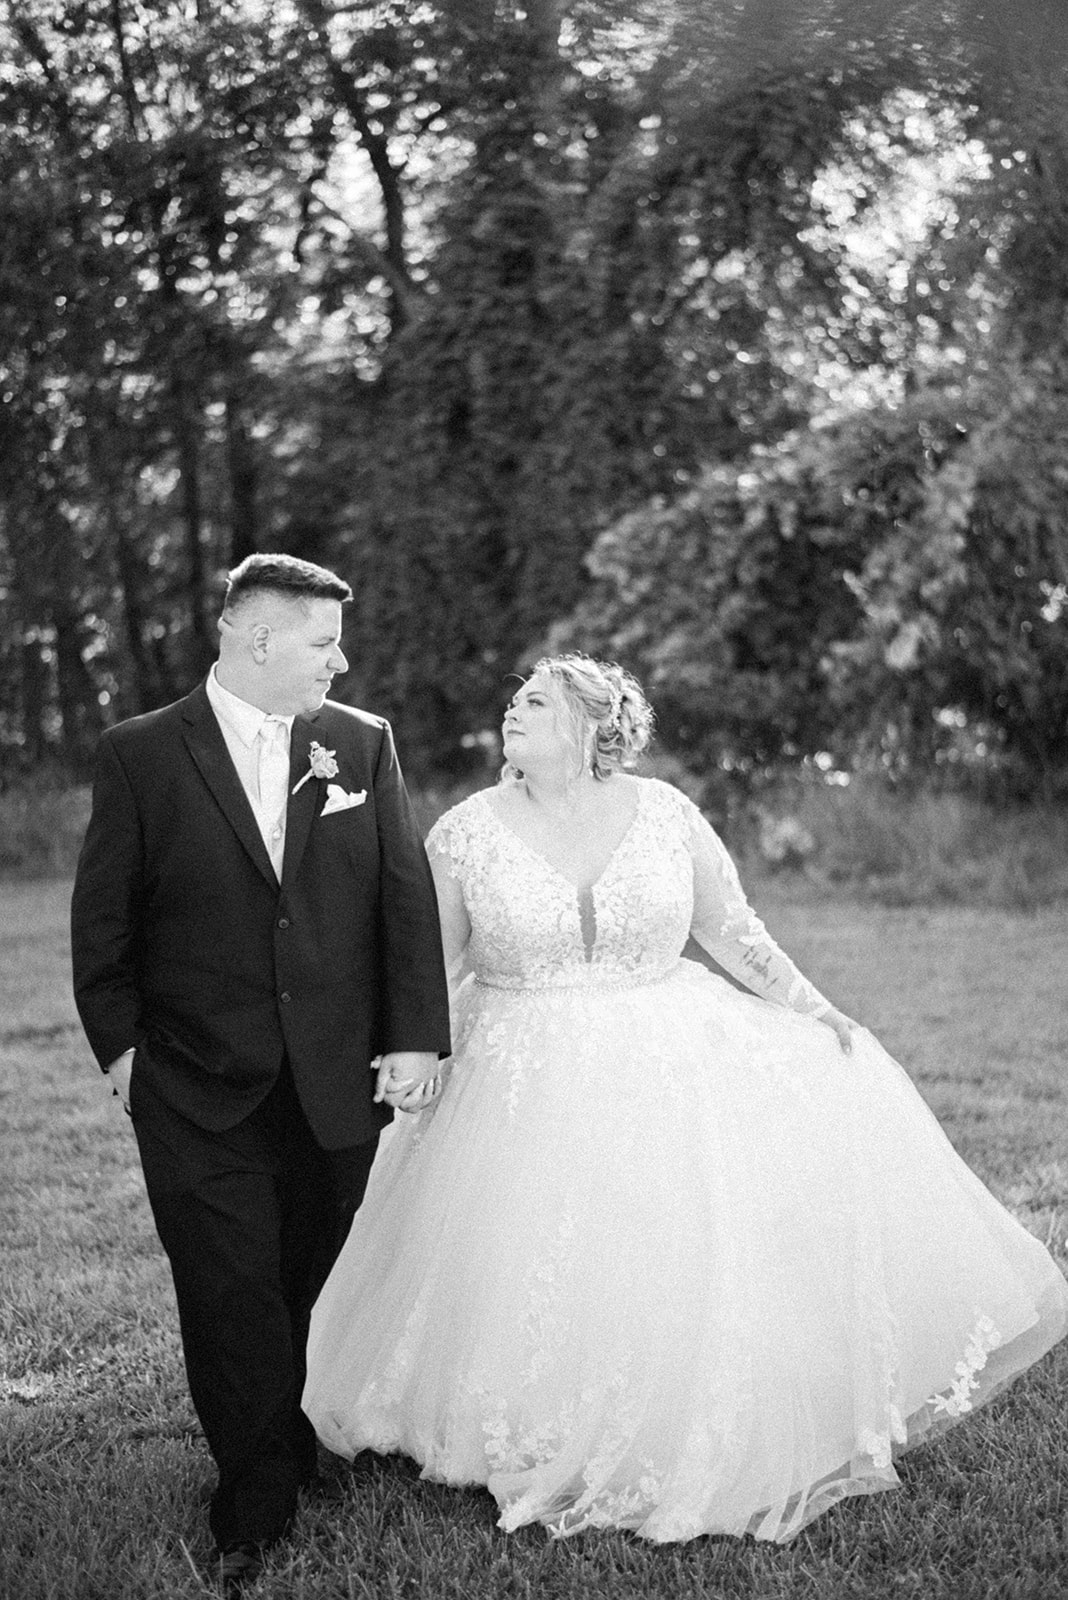 Pennsylvania wedding photographer captures bride and groom walking together after wedding ceremony